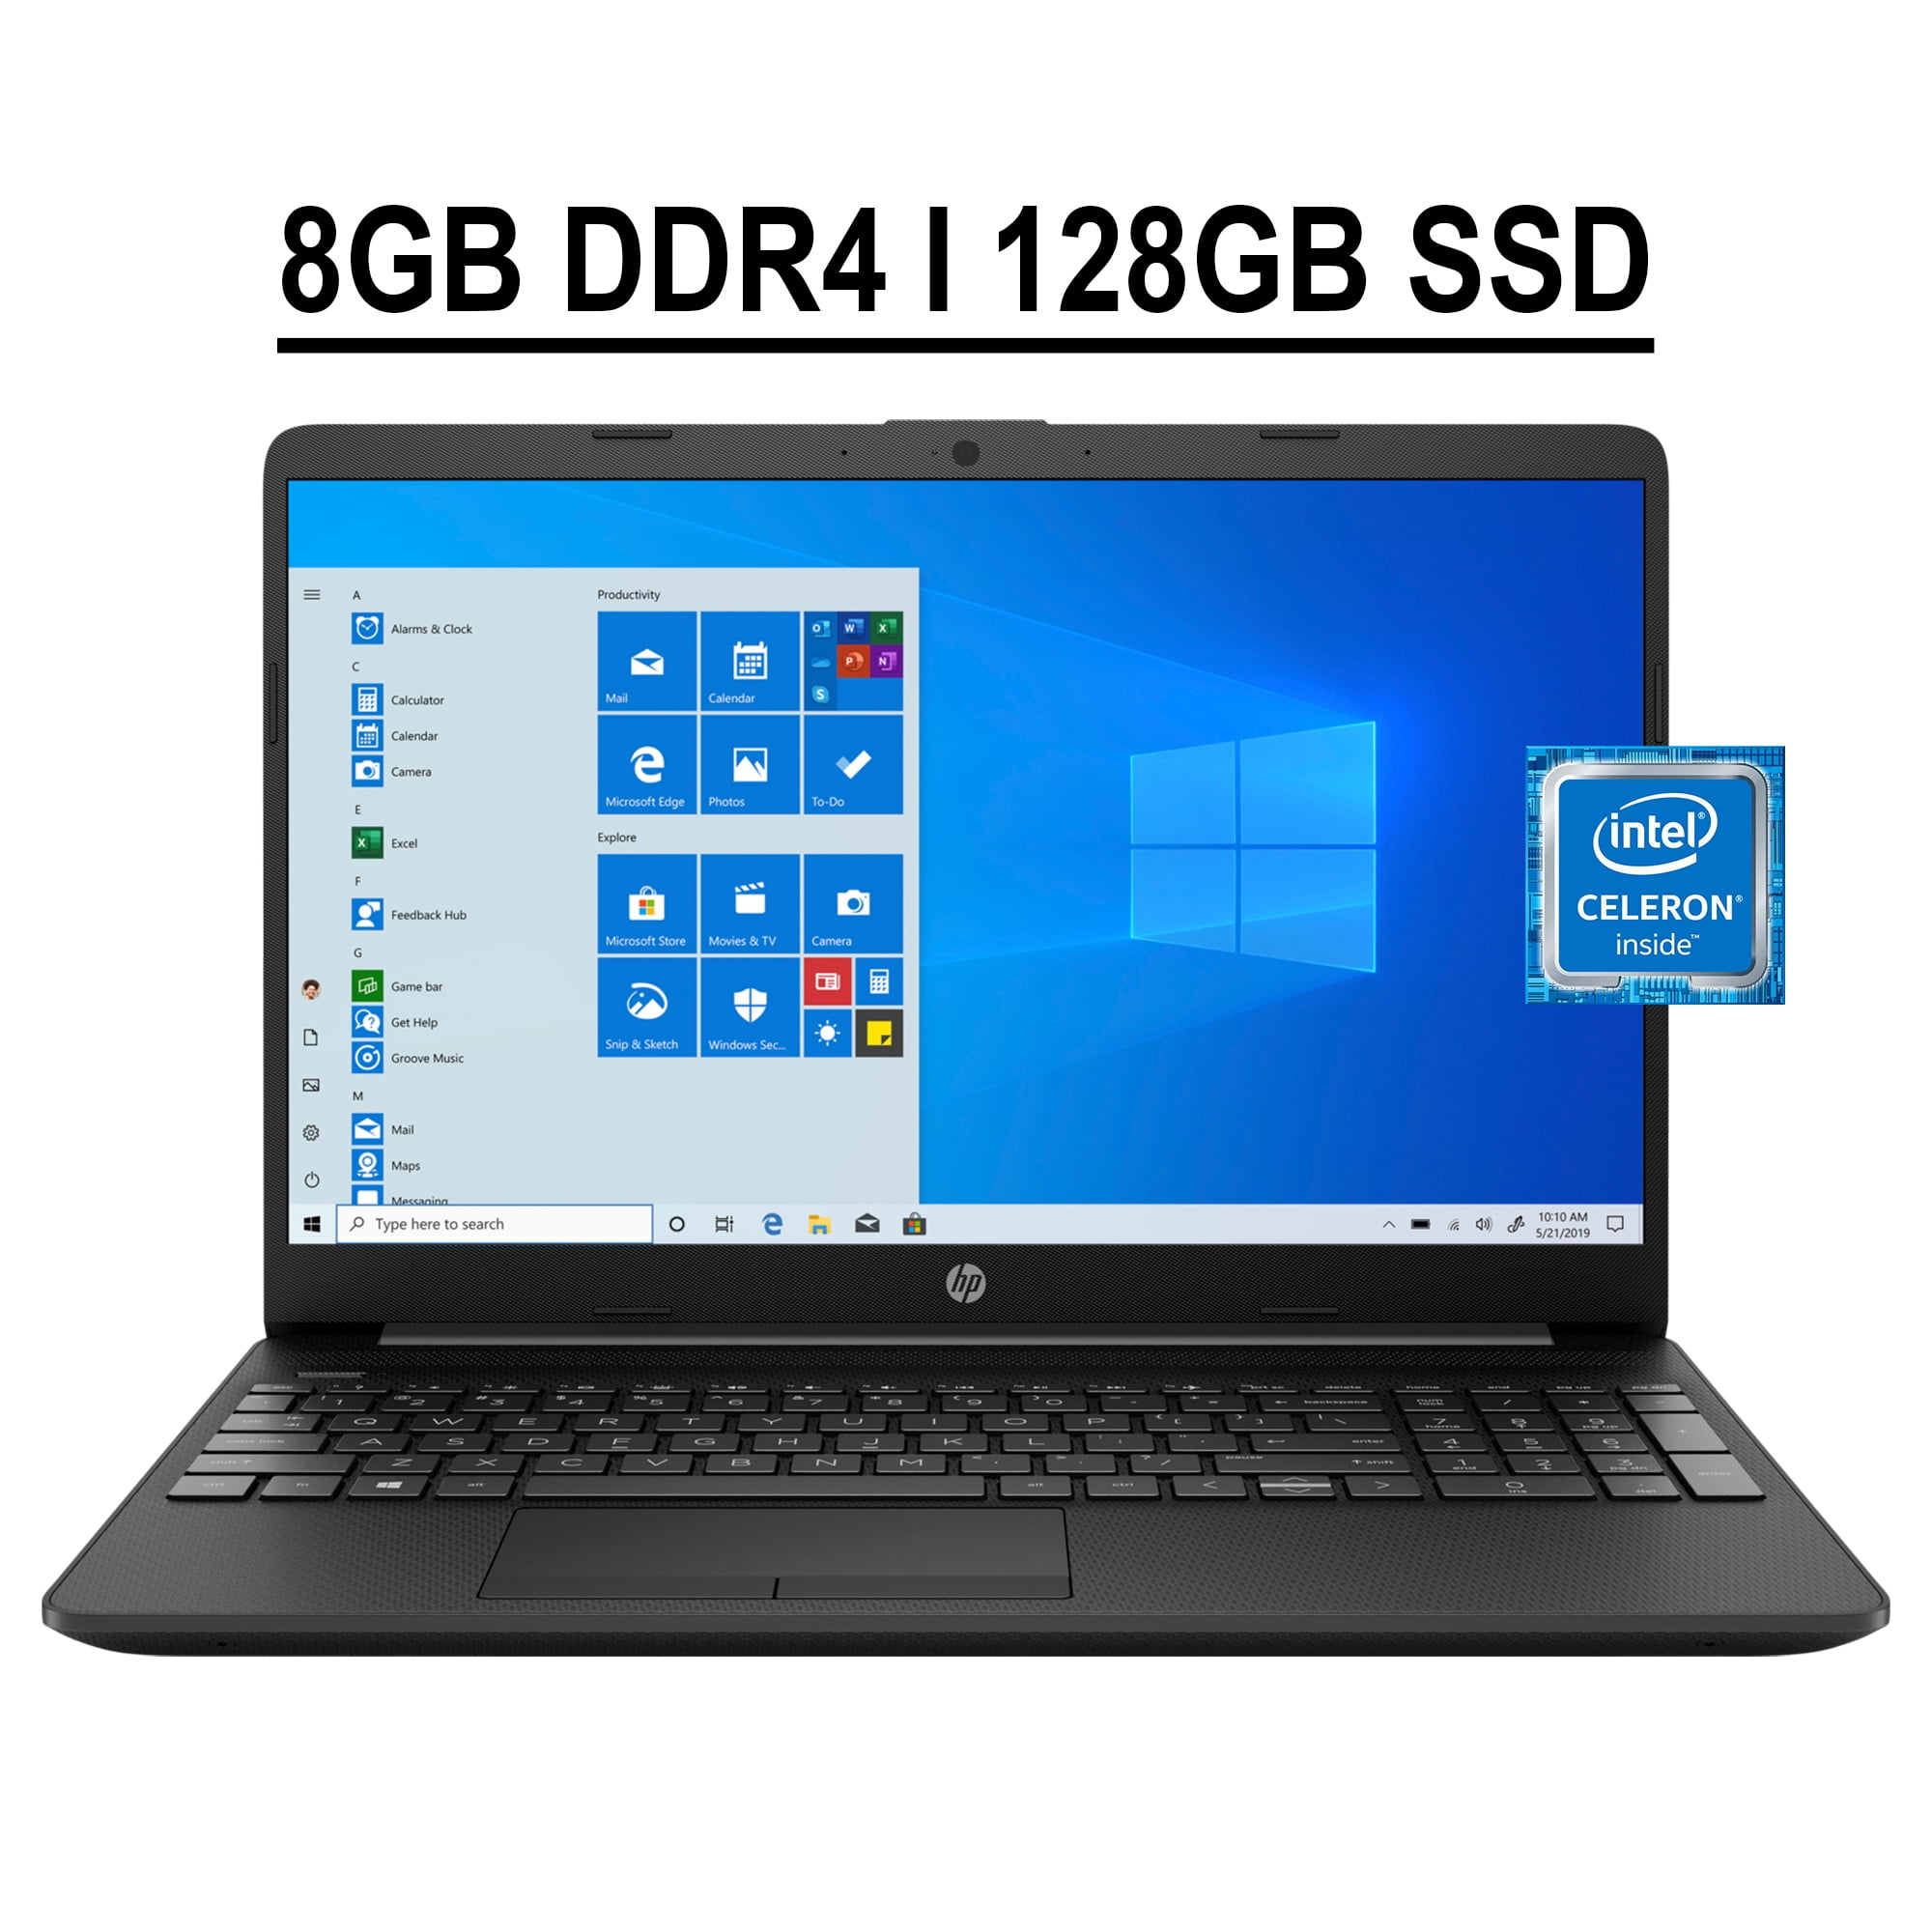 SGIN Laptop, 17 Inch 8GB RAM 256GB SSD Laptops Computer with Intel Celeron  Quad Core Processor, IPS FHD Display, Webcam, Dual Wi-Fi, Buletooth 4.2